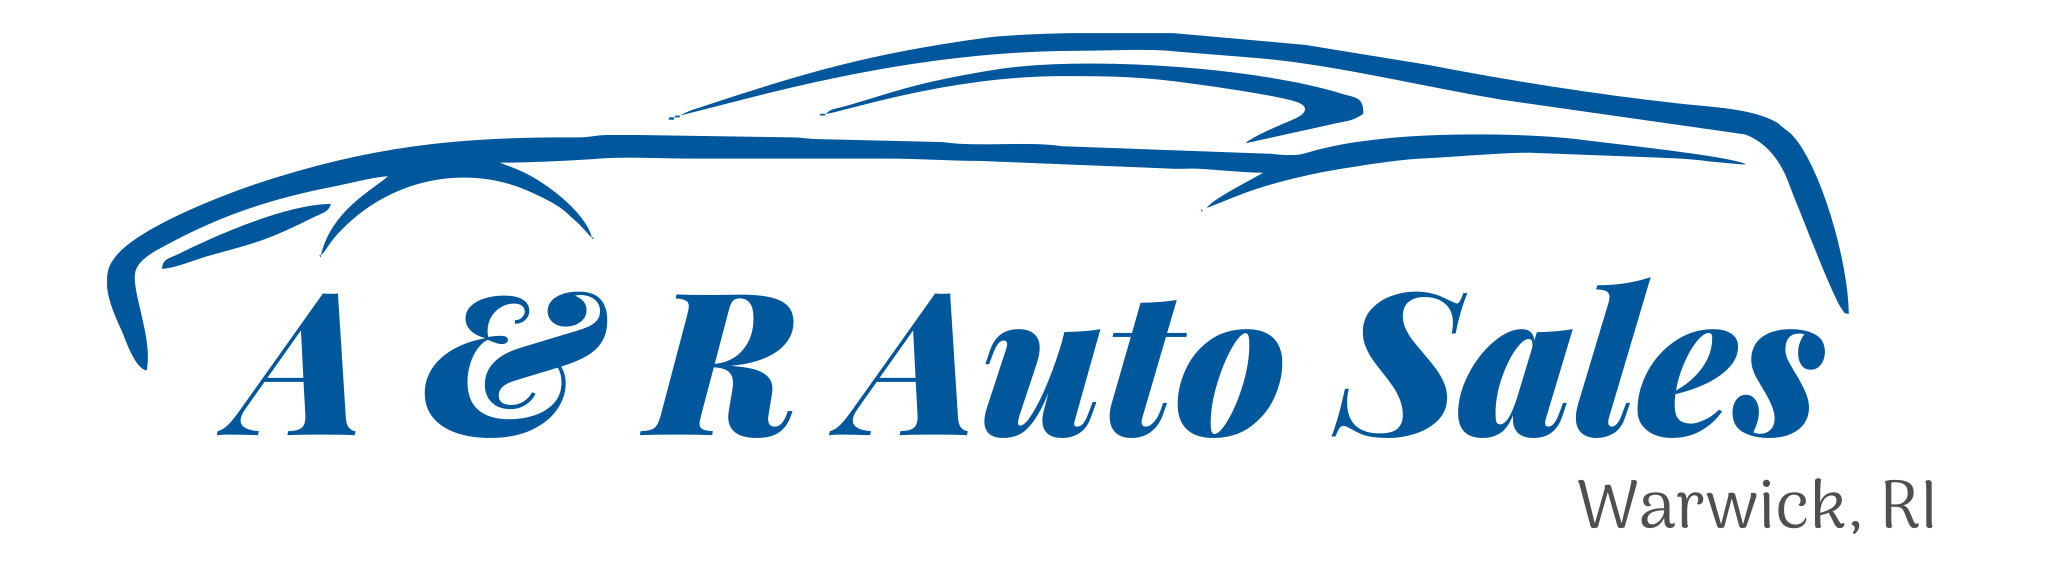 A & R Auto Sales, Inc.